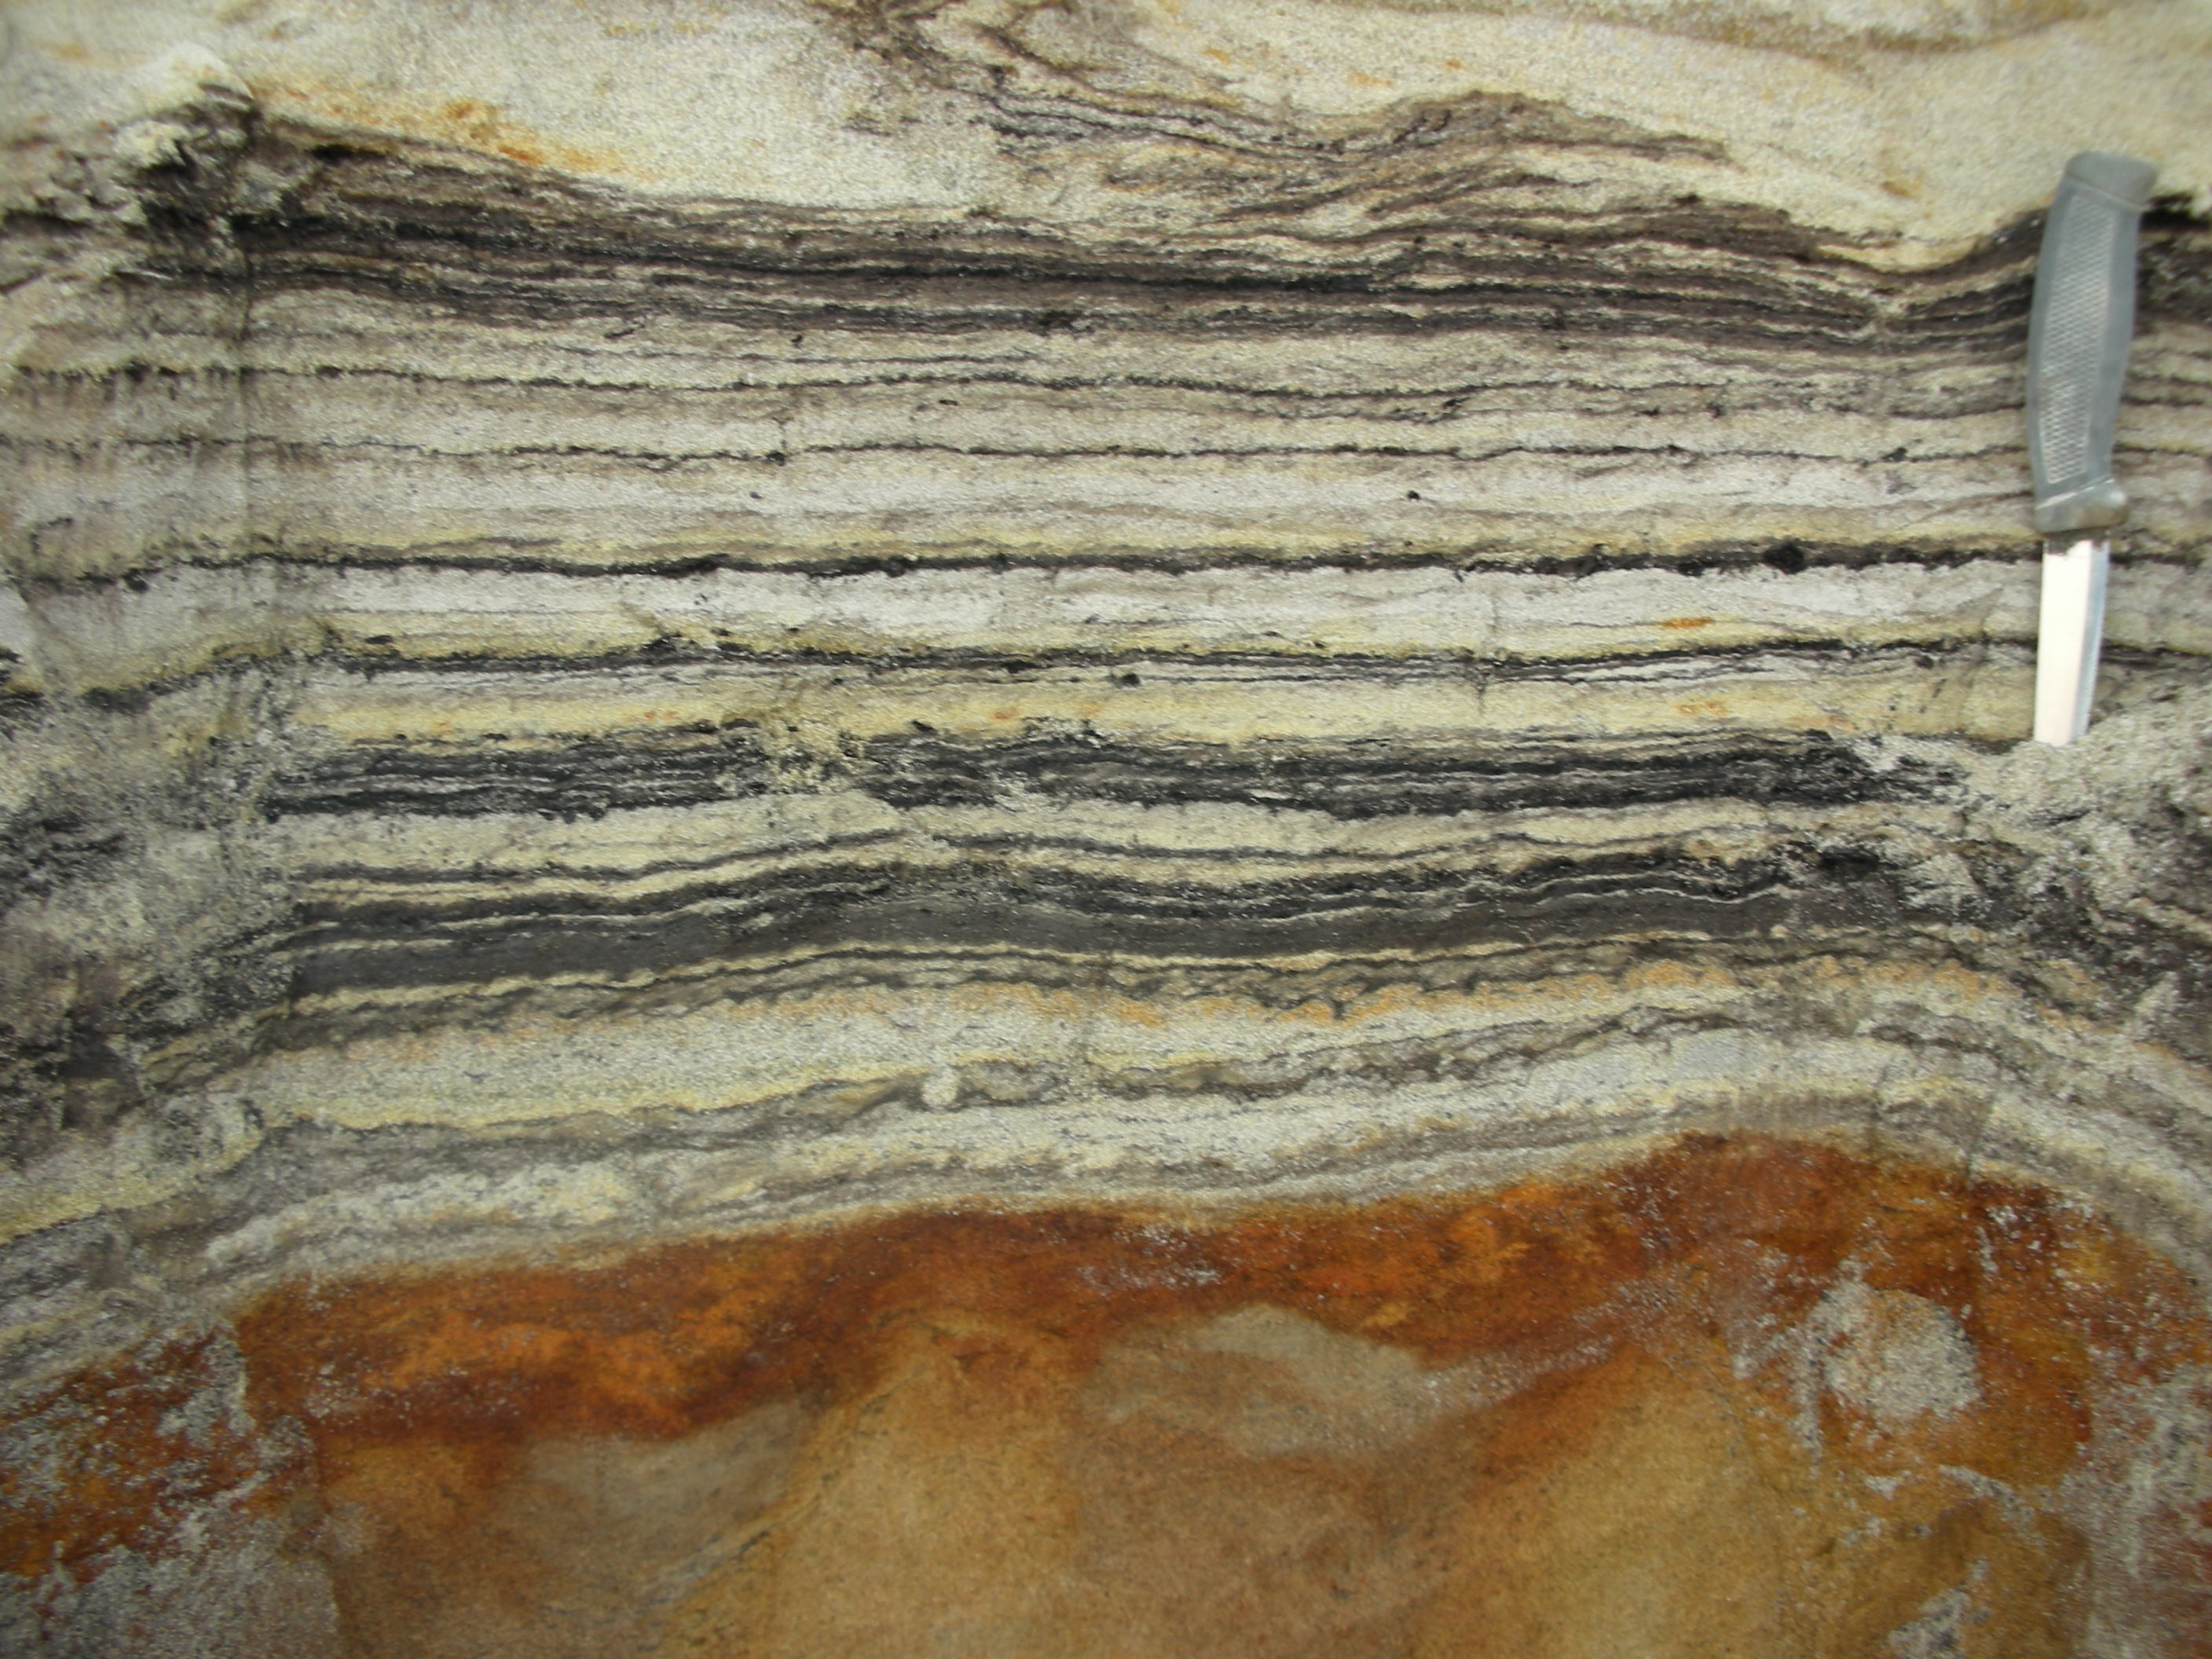 A close-up of organic material in the coastal deposits. (Professor Kurt H. Kjær/ PA)